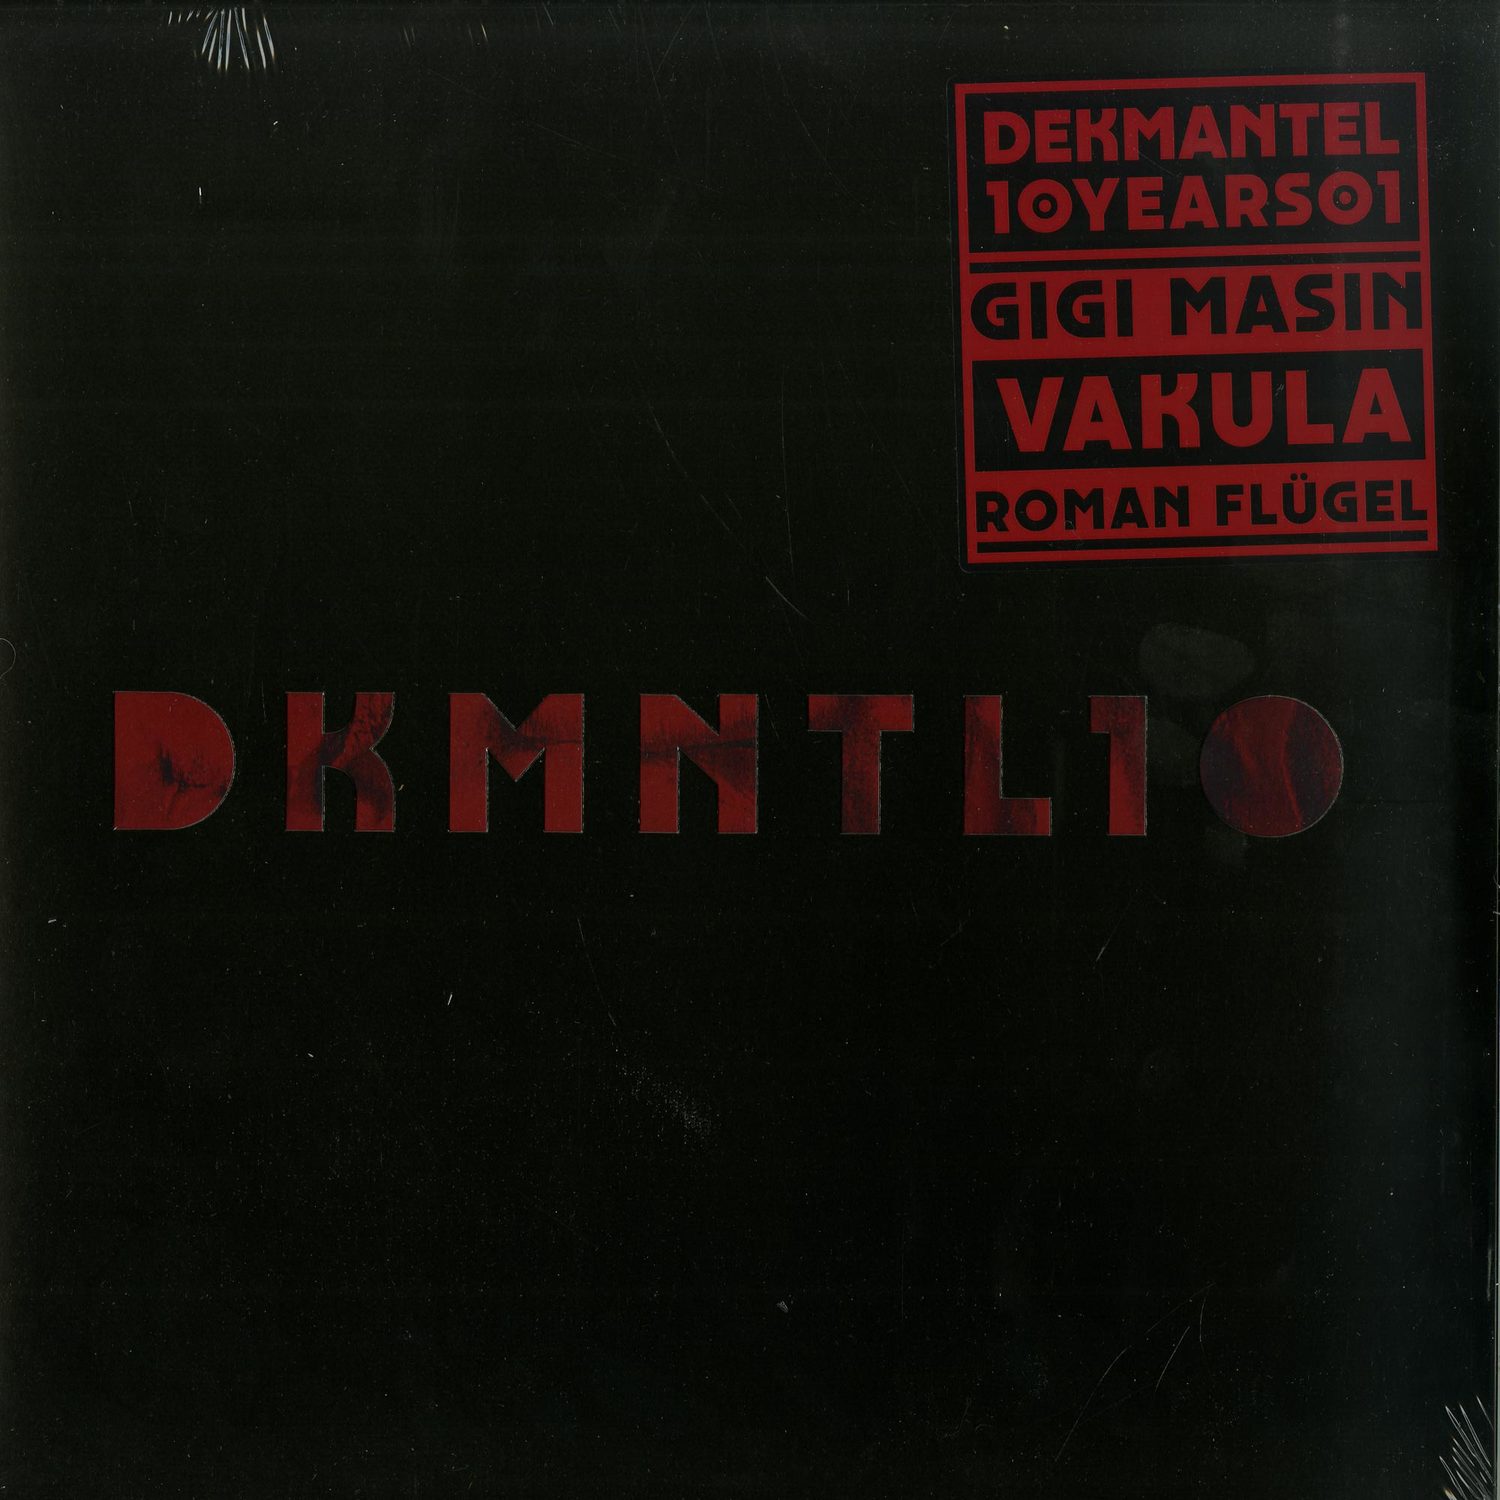 Gigi Masin, Vakula & Roman Flugel - DEKMANTEL 10 YEARS 01 